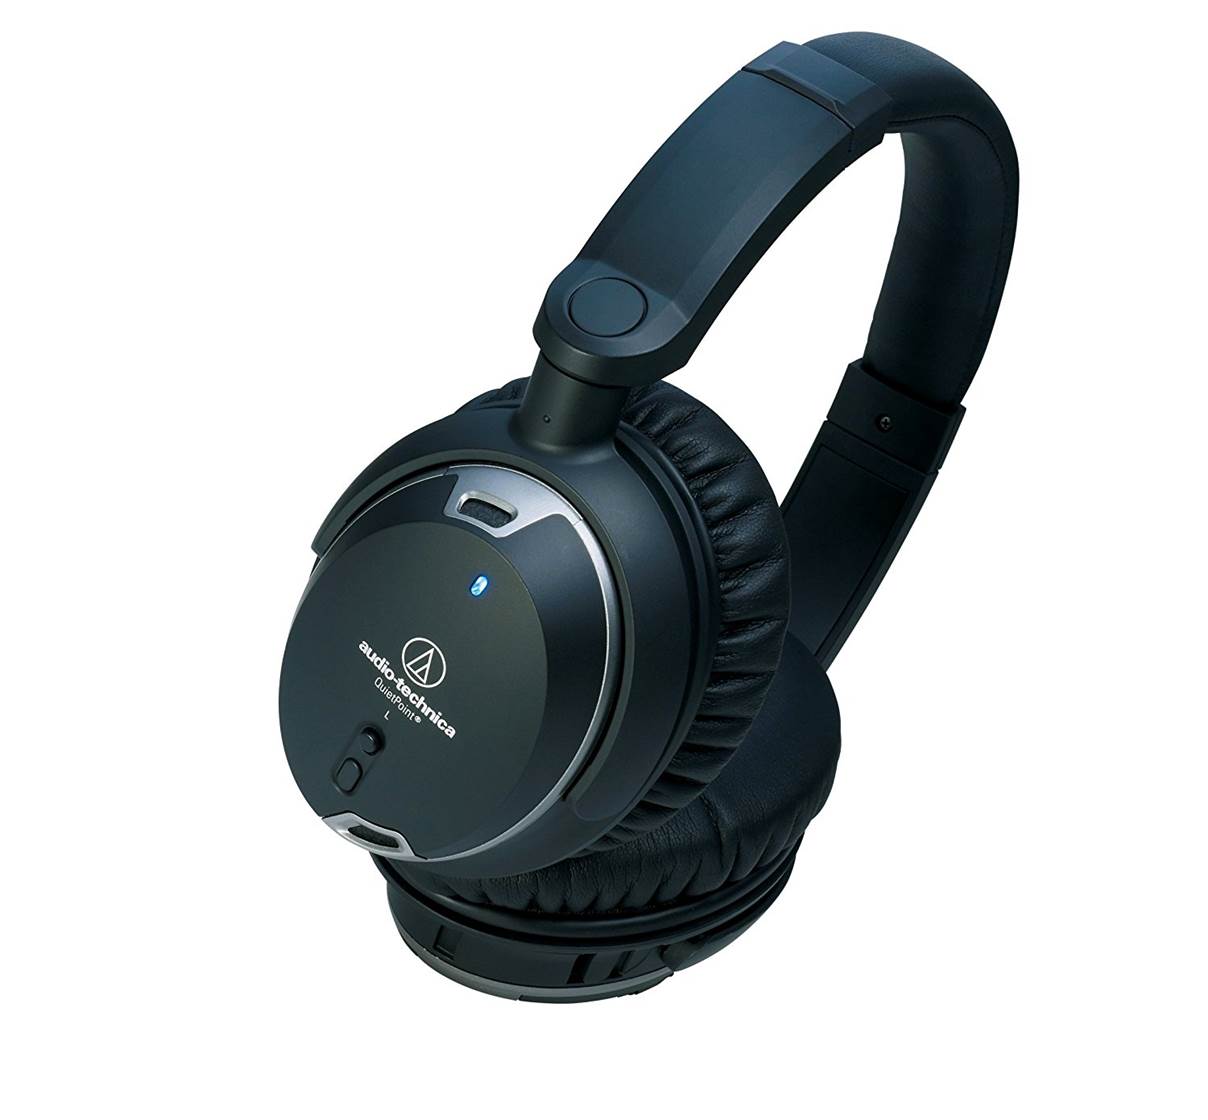 Audio Technica ATH-ANC9 Active Noise Canceling Headphones